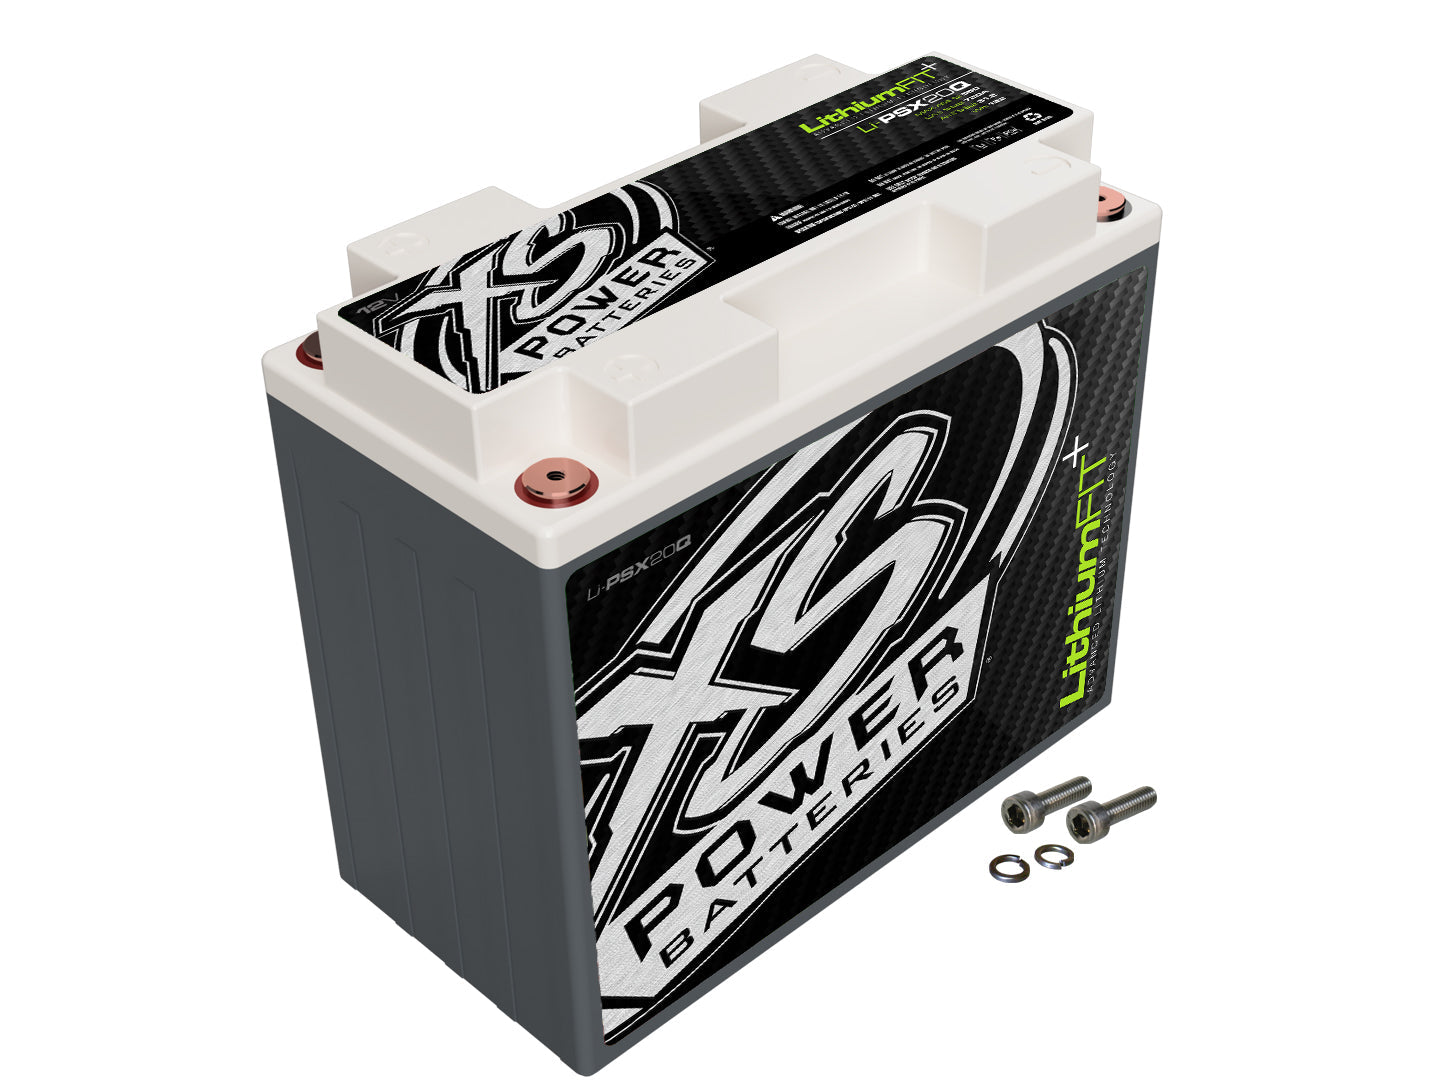 (OPEN BOX) Li-PSX20Q XS Power 12VDC Lithium Powersports Vehicle Battery 960A 10.4Ah Group 20L